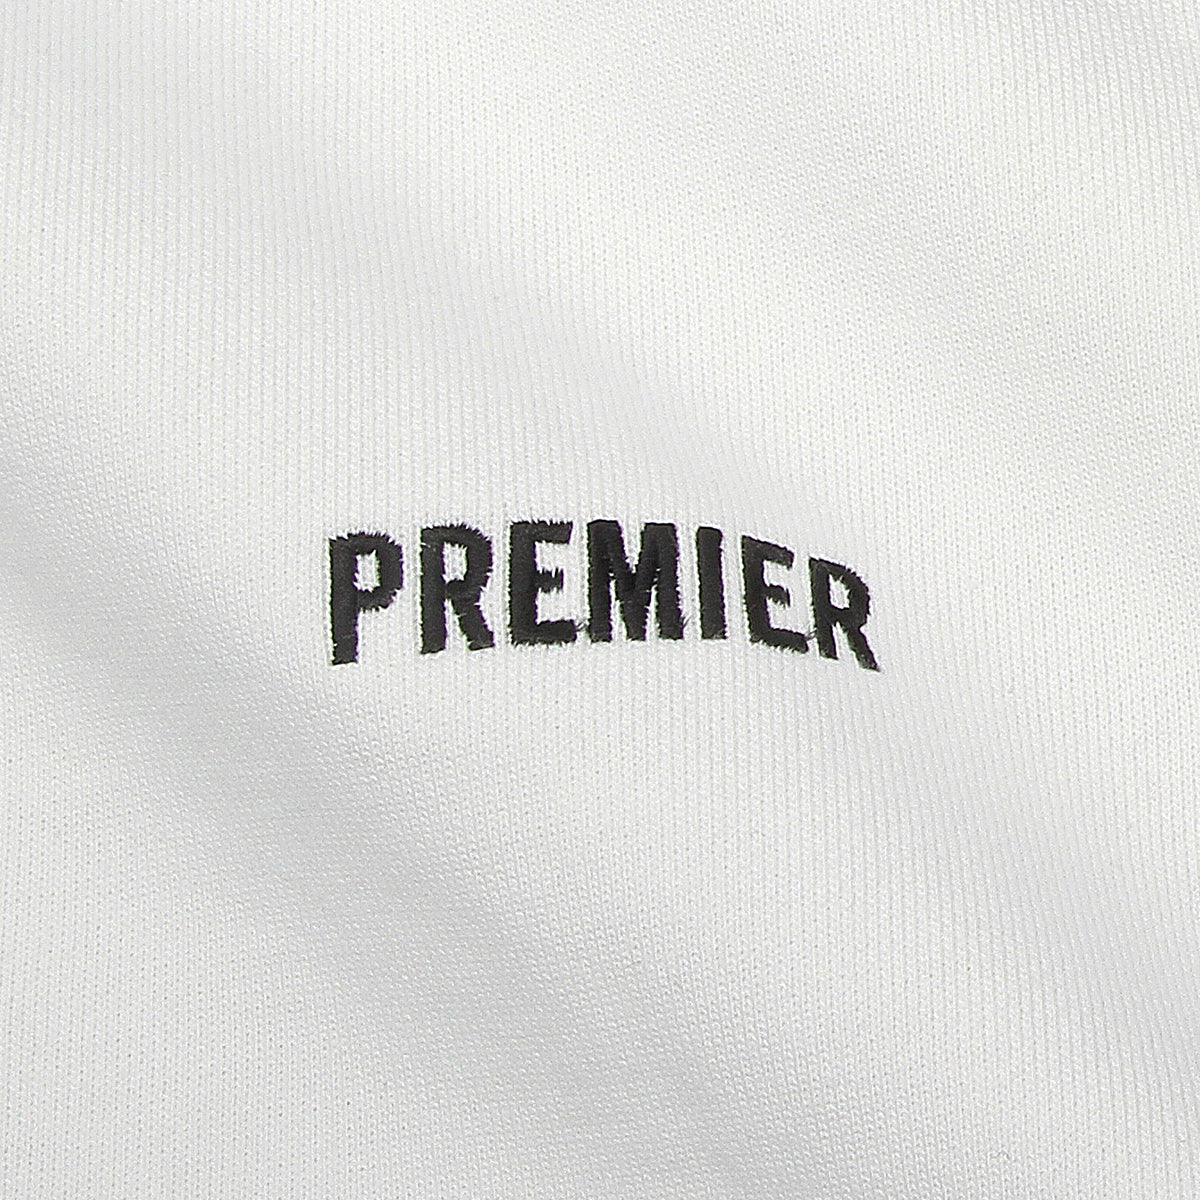 Premier x Grand Collared Sweatshirt Black / White